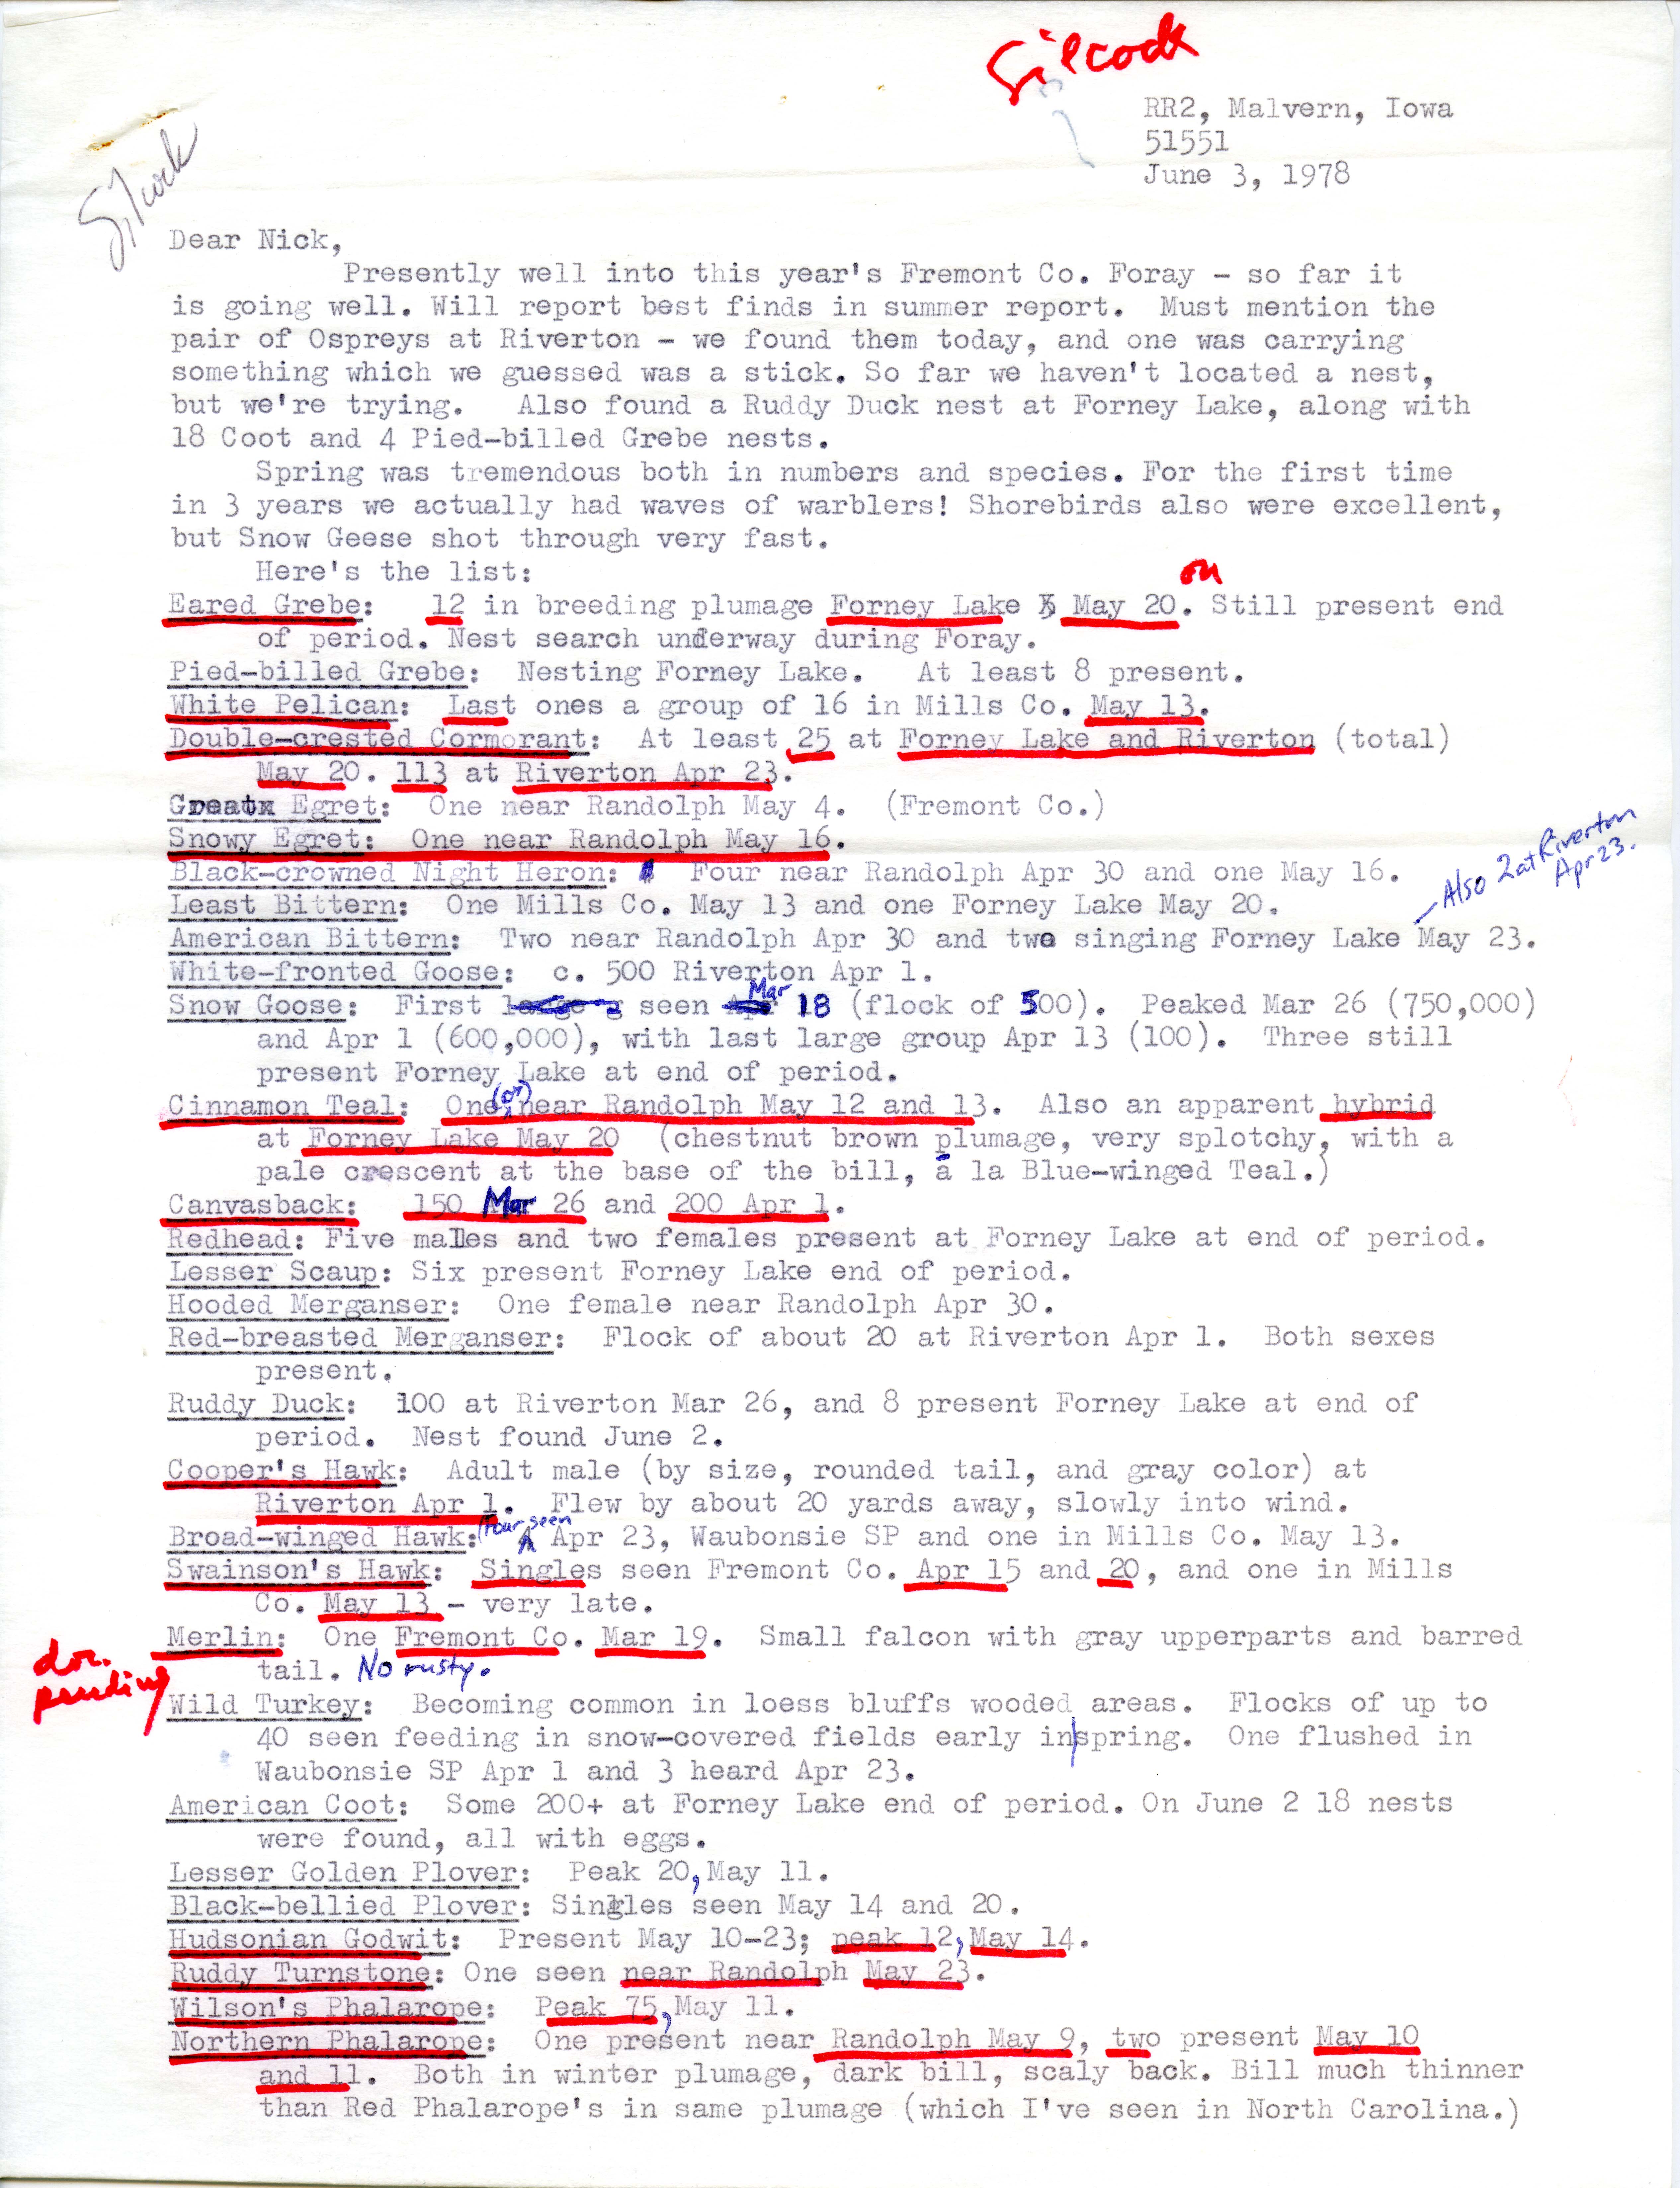 Ross W. Silcock letter to Nicholas S. Halmi regarding bird sightings, June 3, 1978